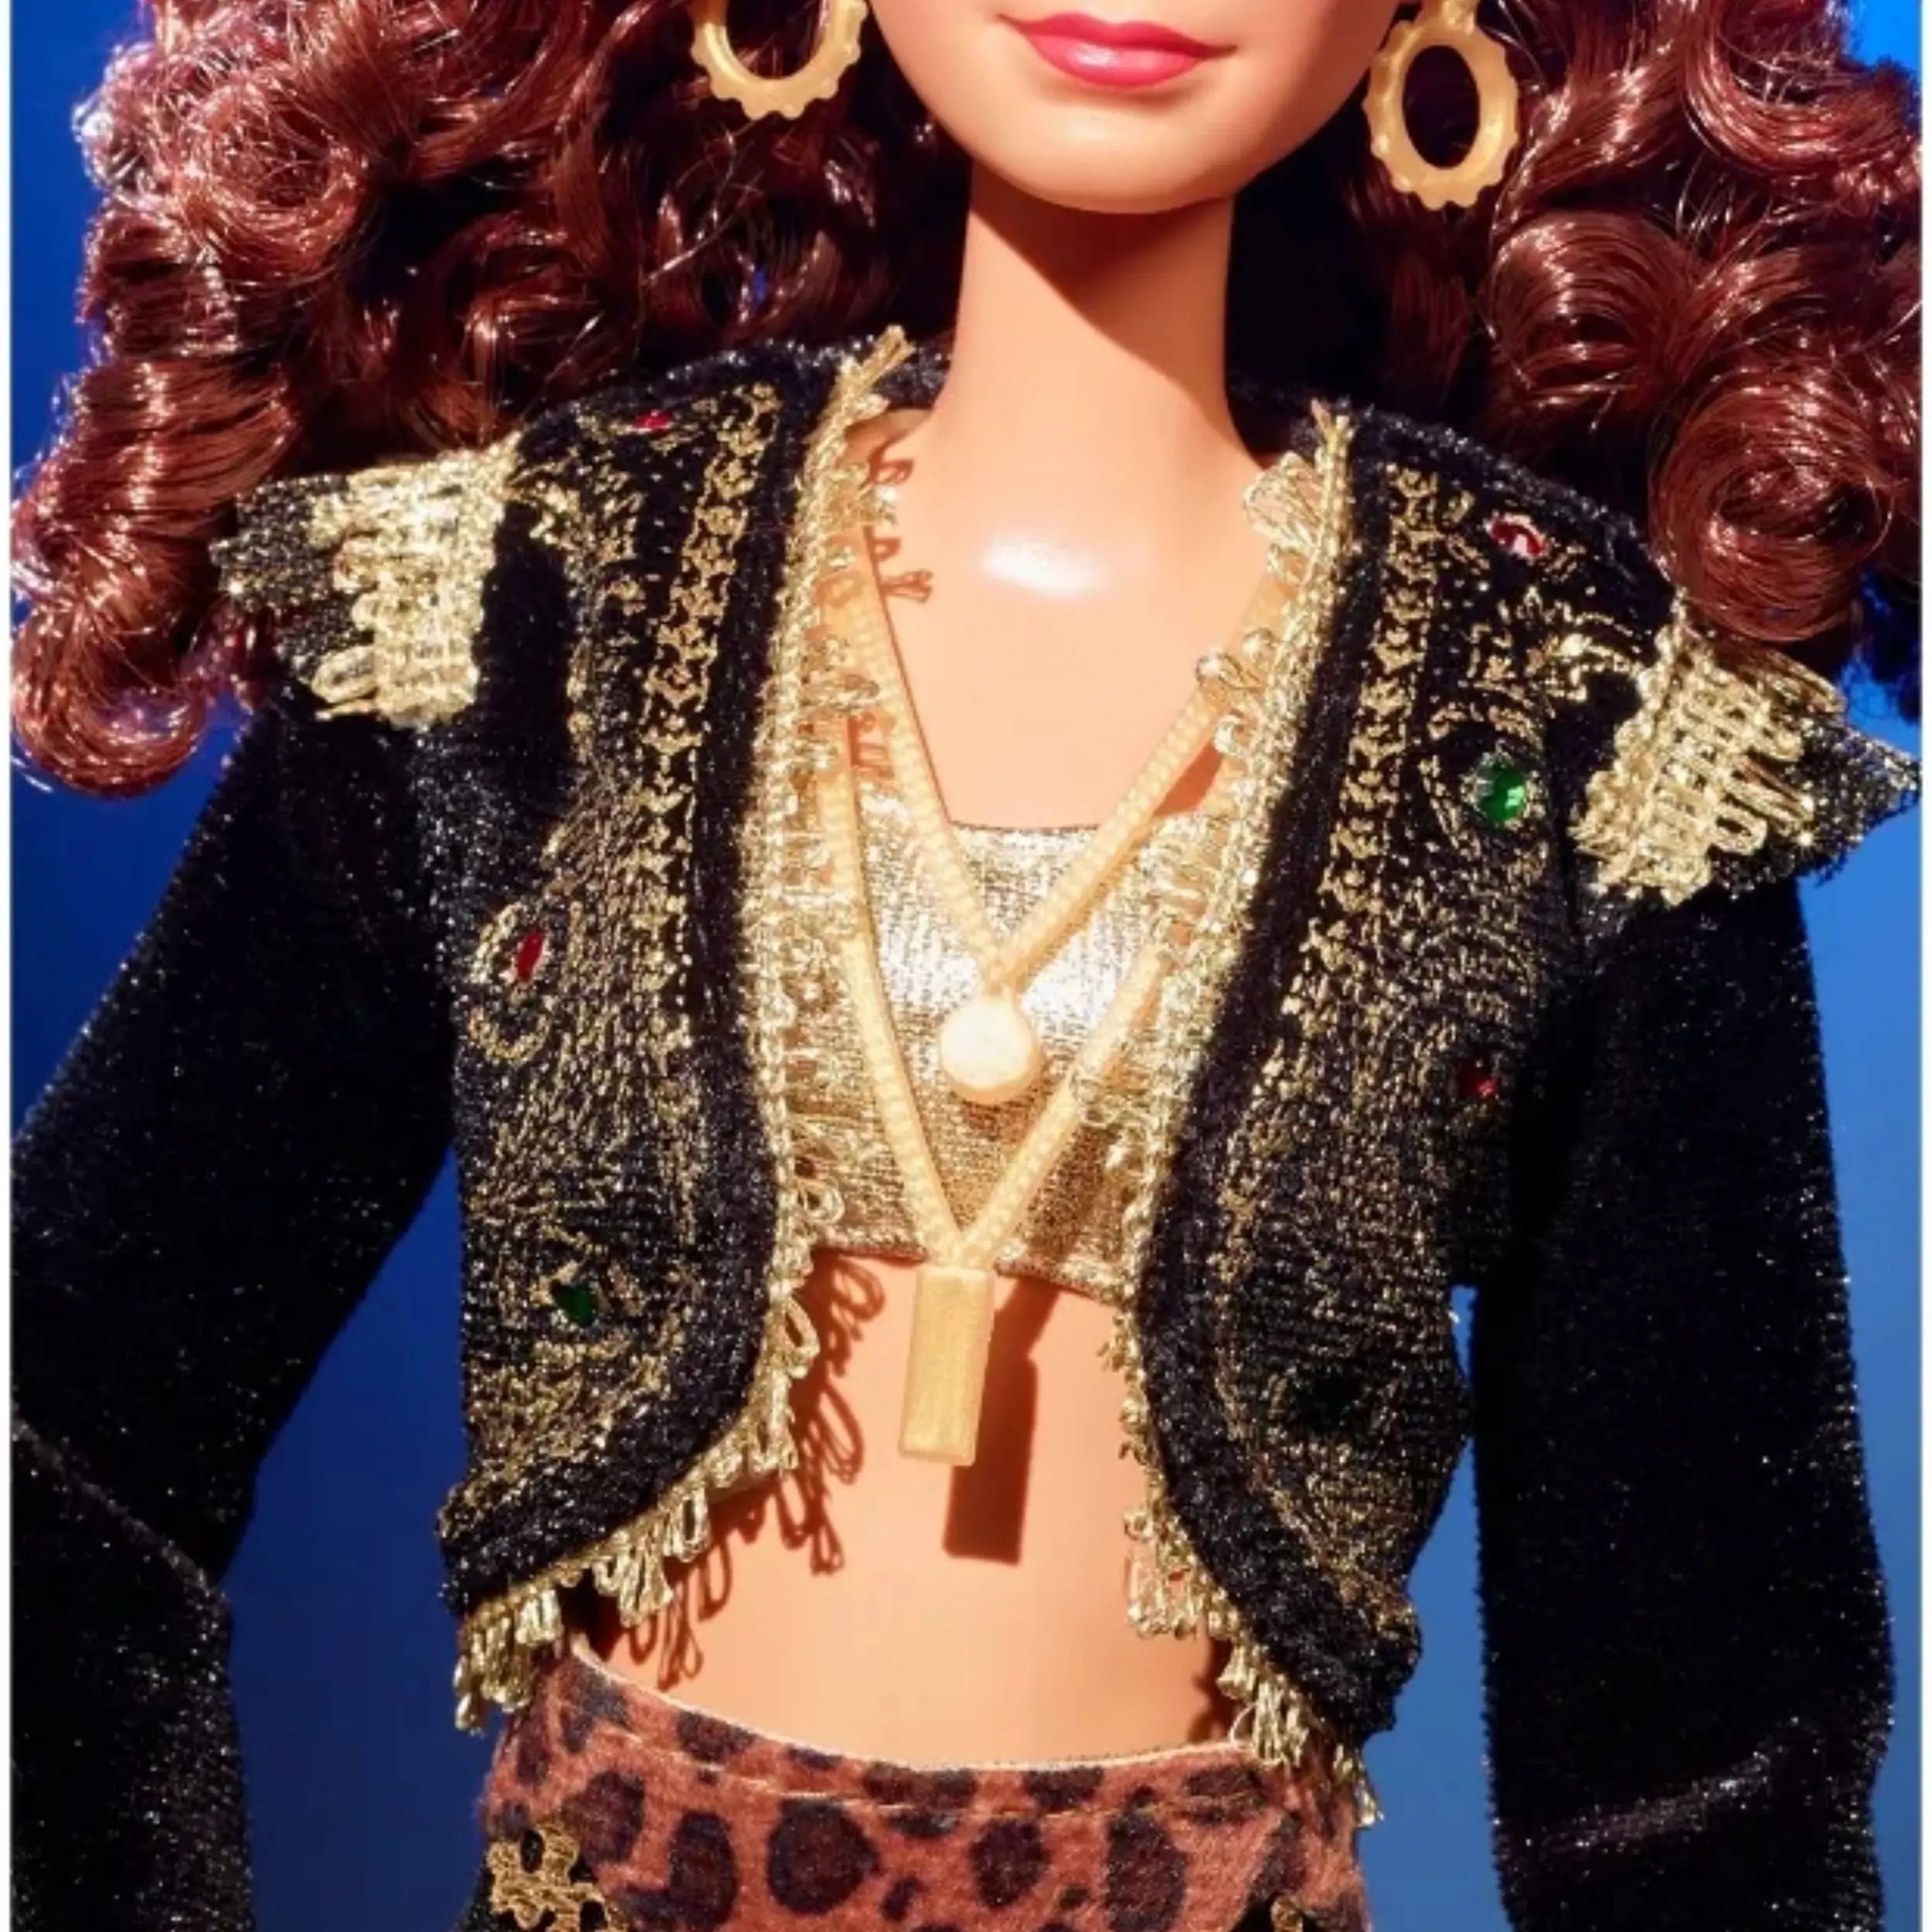 Mattel - Barbie Signature Gloria Estefan Collector Doll HCB85